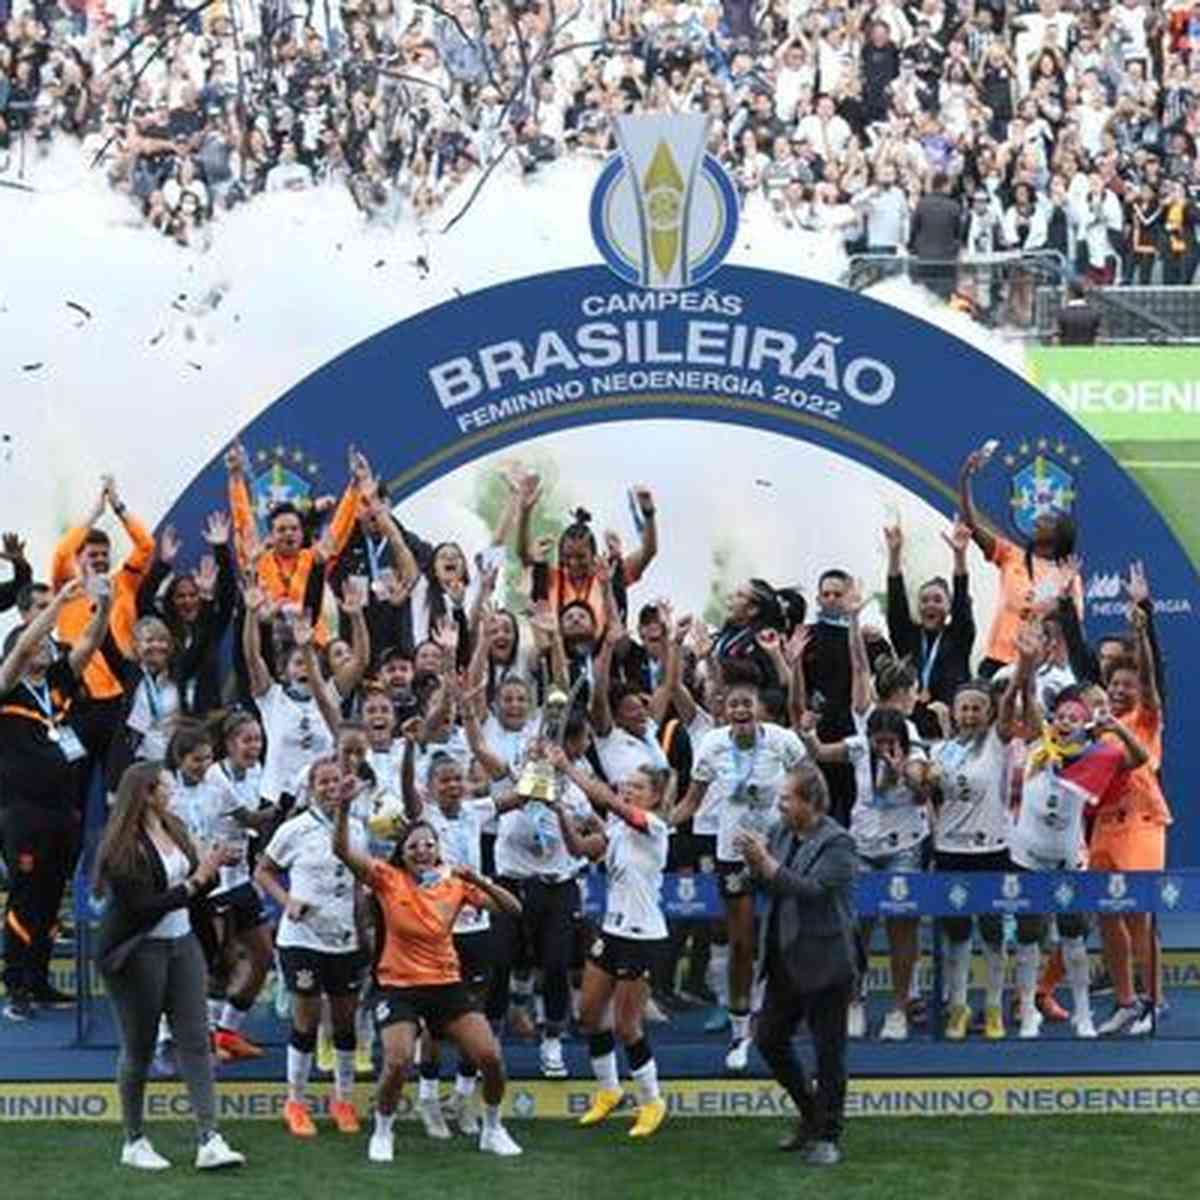 Xadrez: Começou a final do Brasileiro Feminino  Brasileiro feminino,  Feminino, Campeonato brasileiro feminino